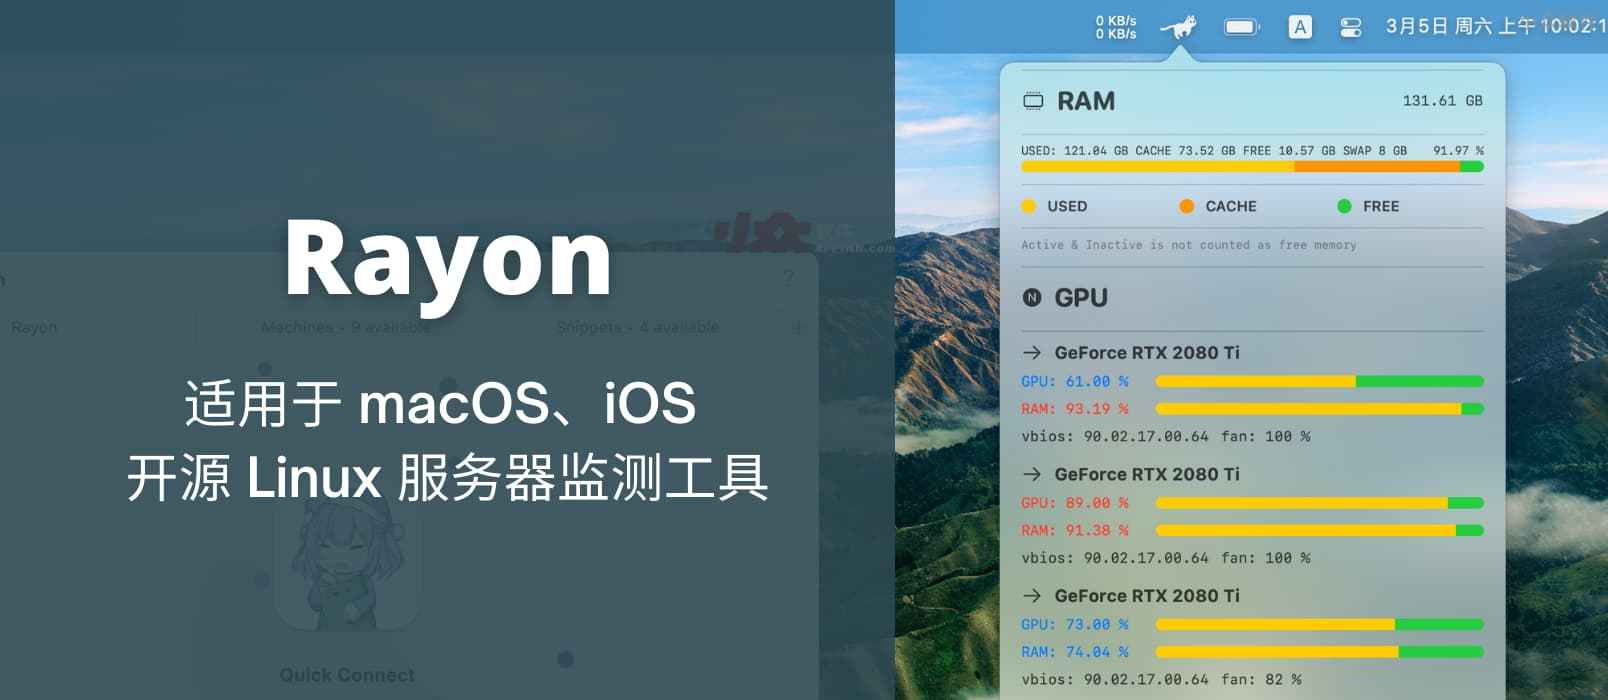 Rayon - 适用于 macOS、iOS 系统的开源 Linux 服务器监控工具